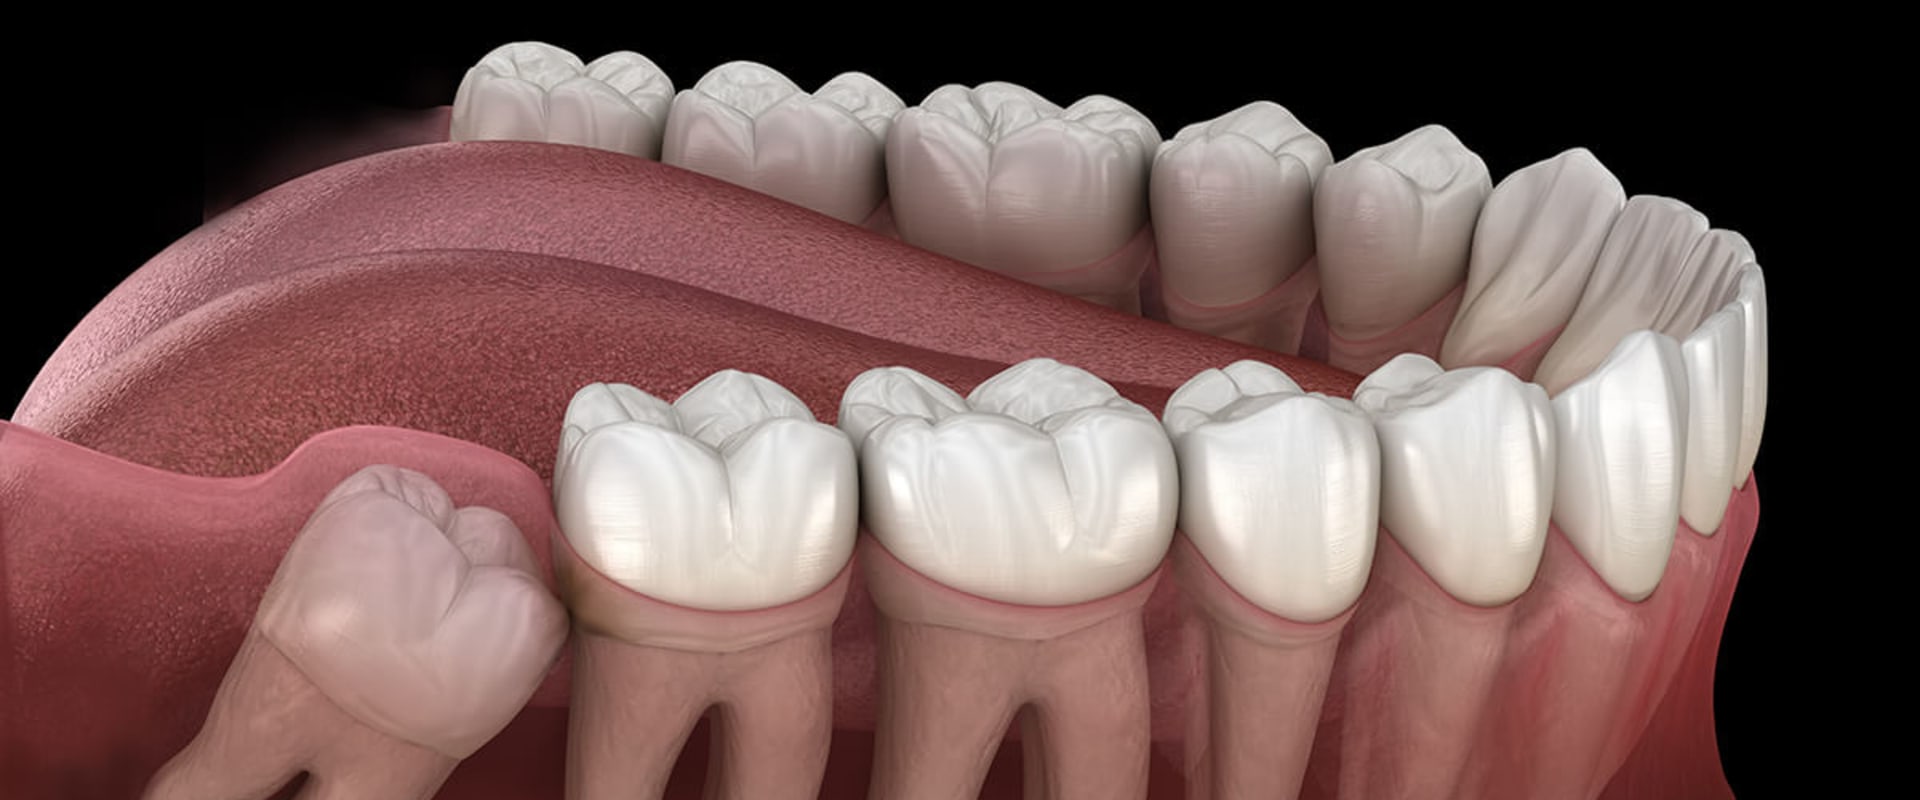 Can a normal dentist remove wisdom teeth?